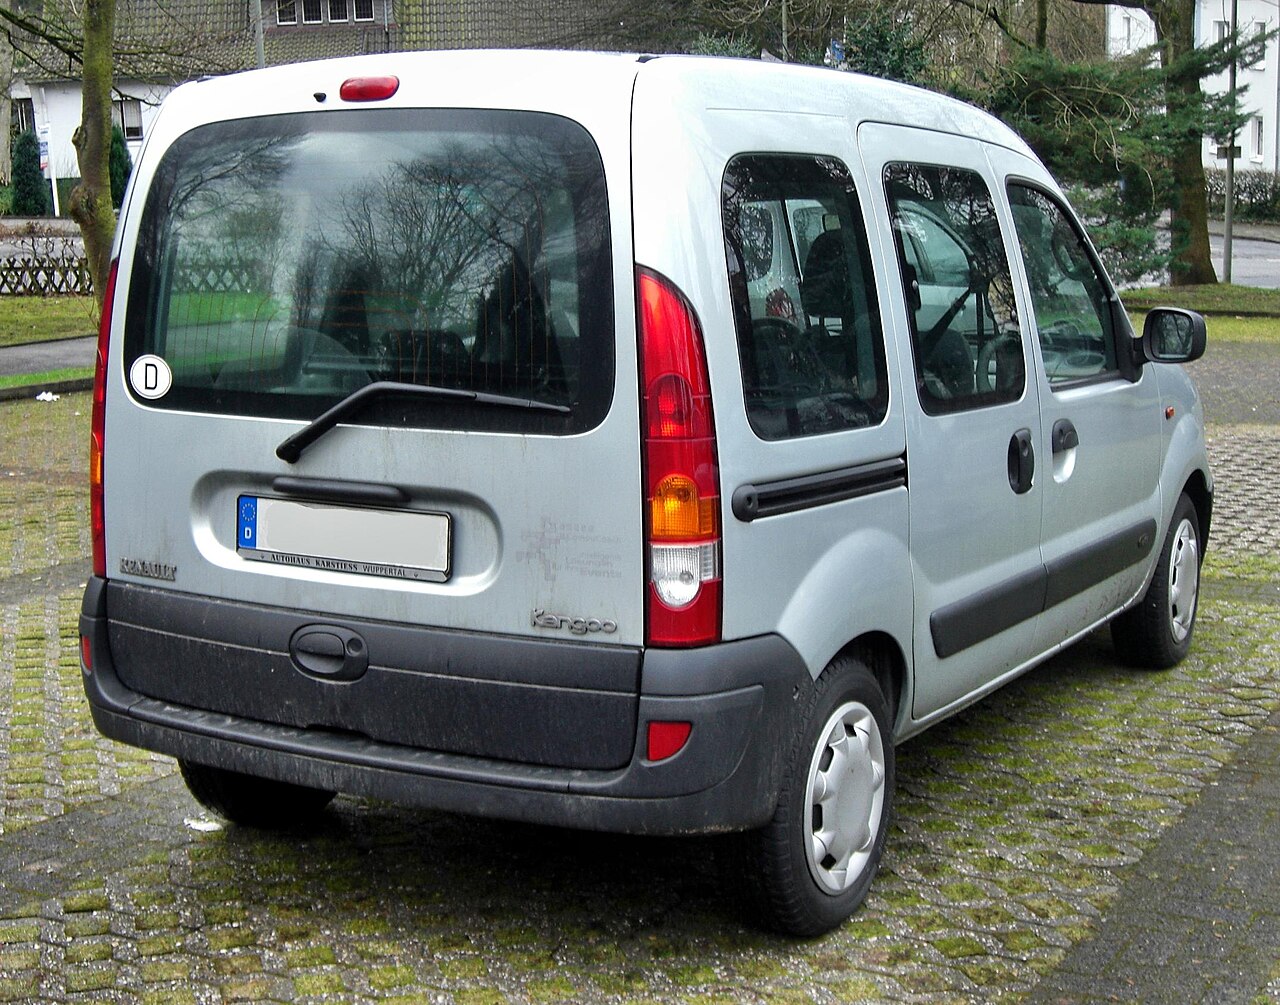 punto final Litoral servidor File:Renault Kangoo rear.JPG - Wikimedia Commons